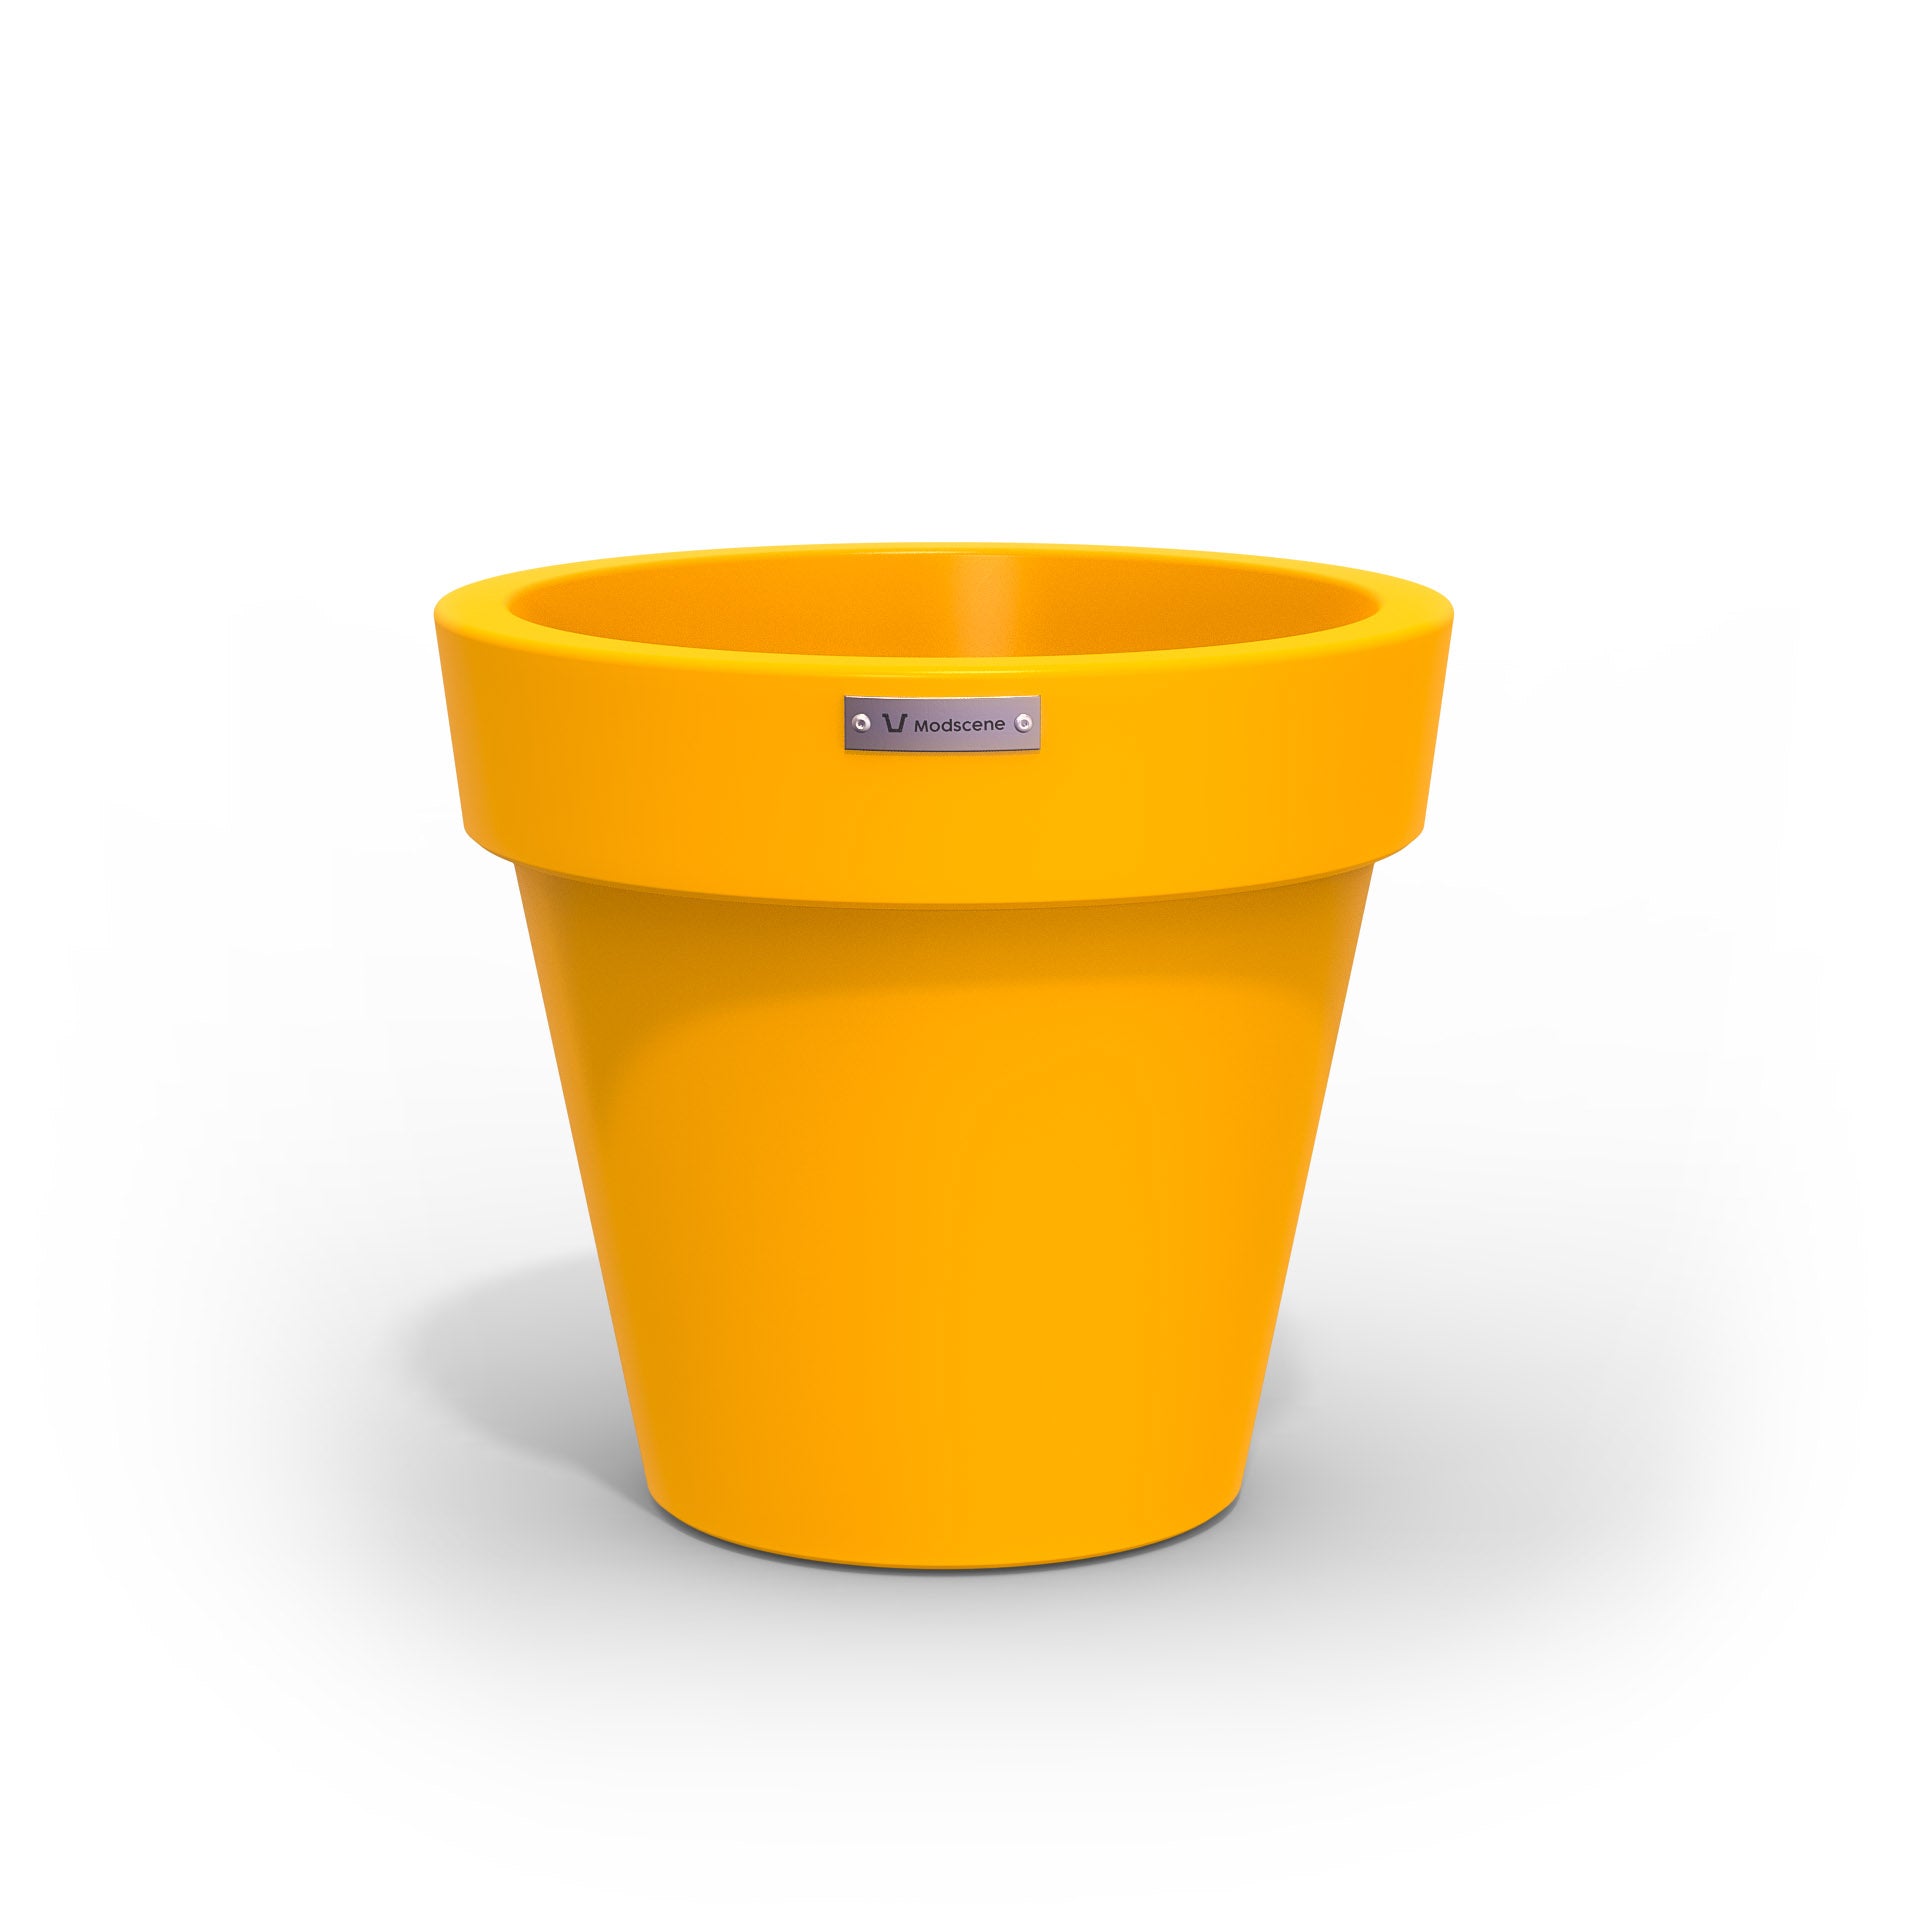 Small Modscene plastic planter pot in a yellow colour. NZ made.